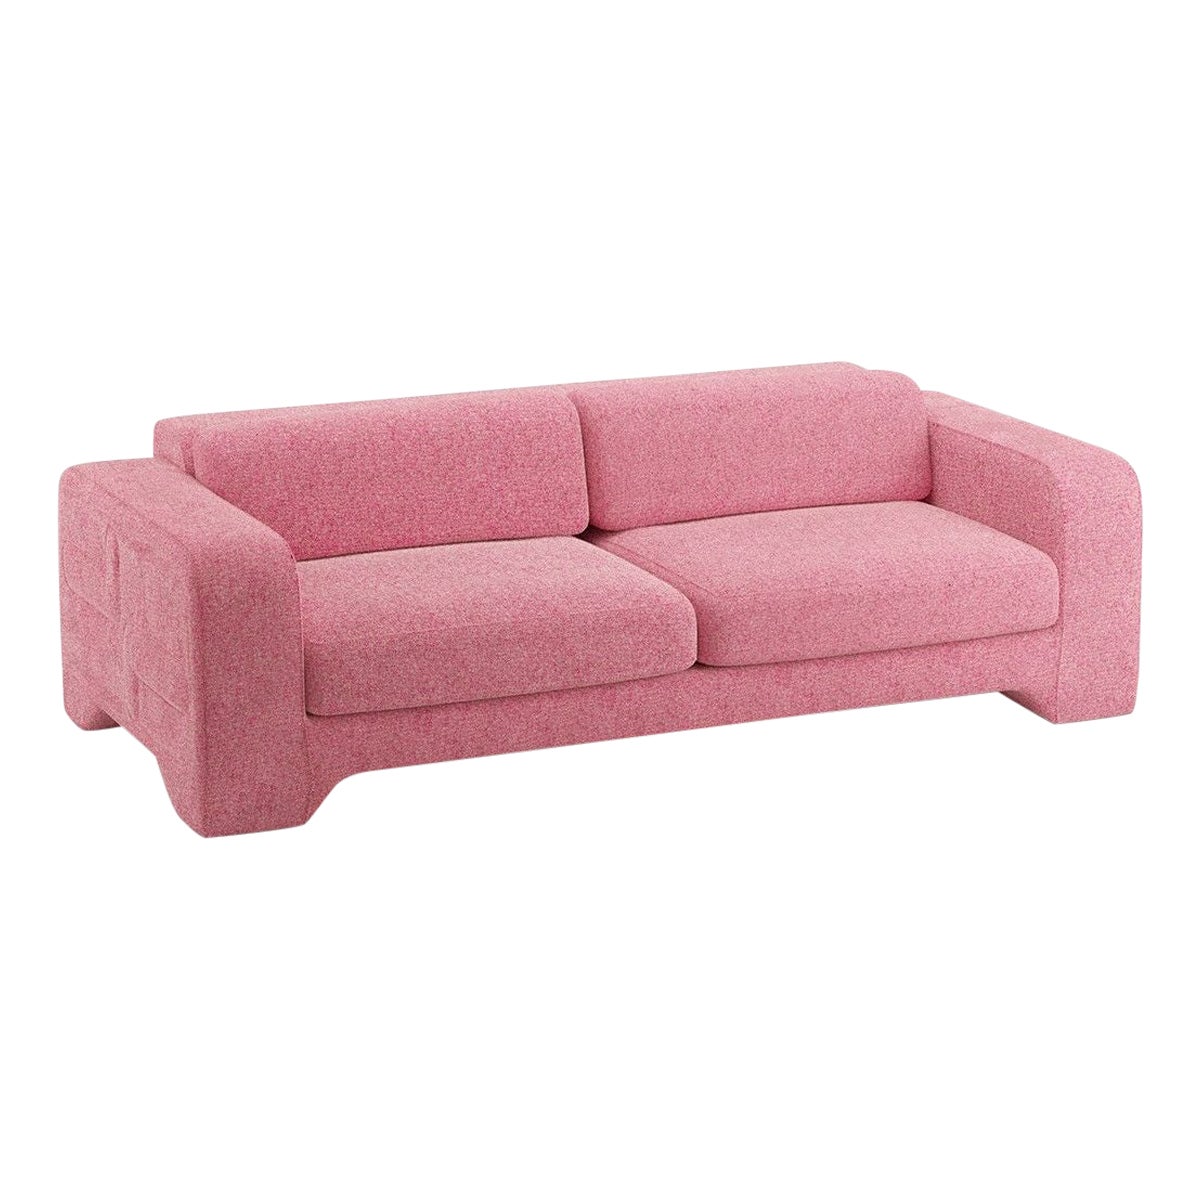 Popus Editions Giovanna 4 Seater Sofa in Fuschia London Linen Fabric For Sale